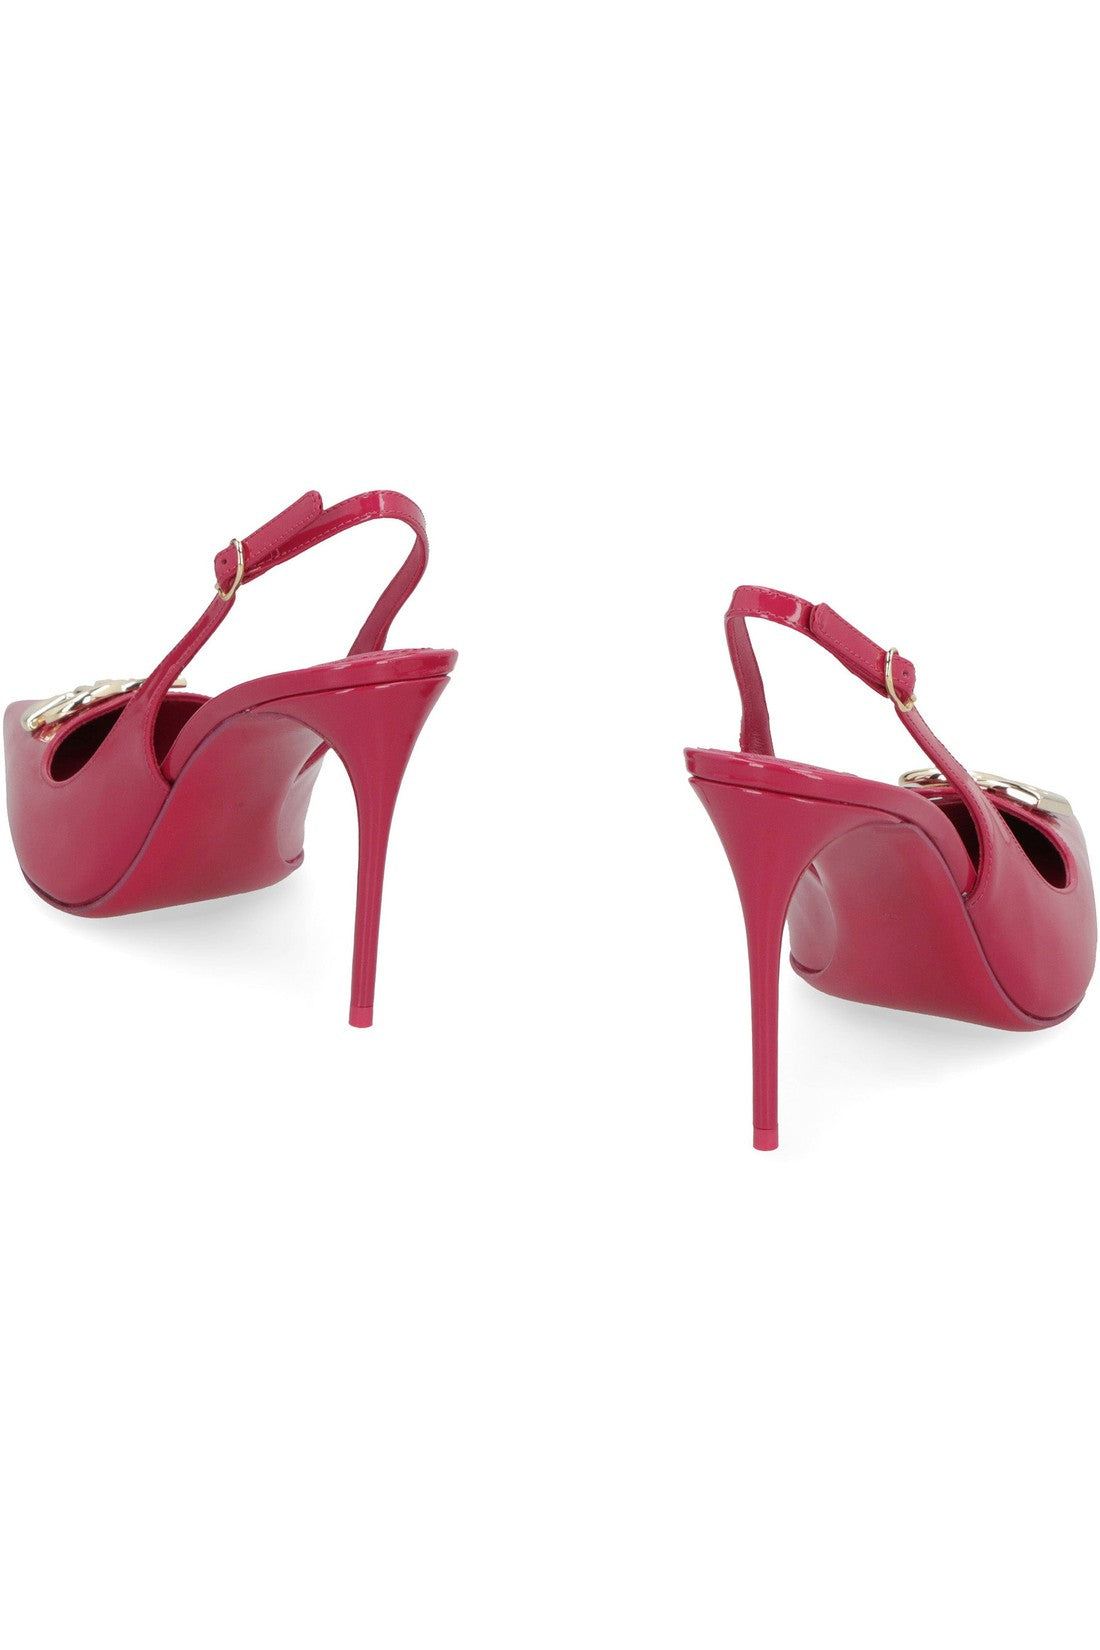 Dolce & Gabbana-OUTLET-SALE-Leather slingback pumps-ARCHIVIST